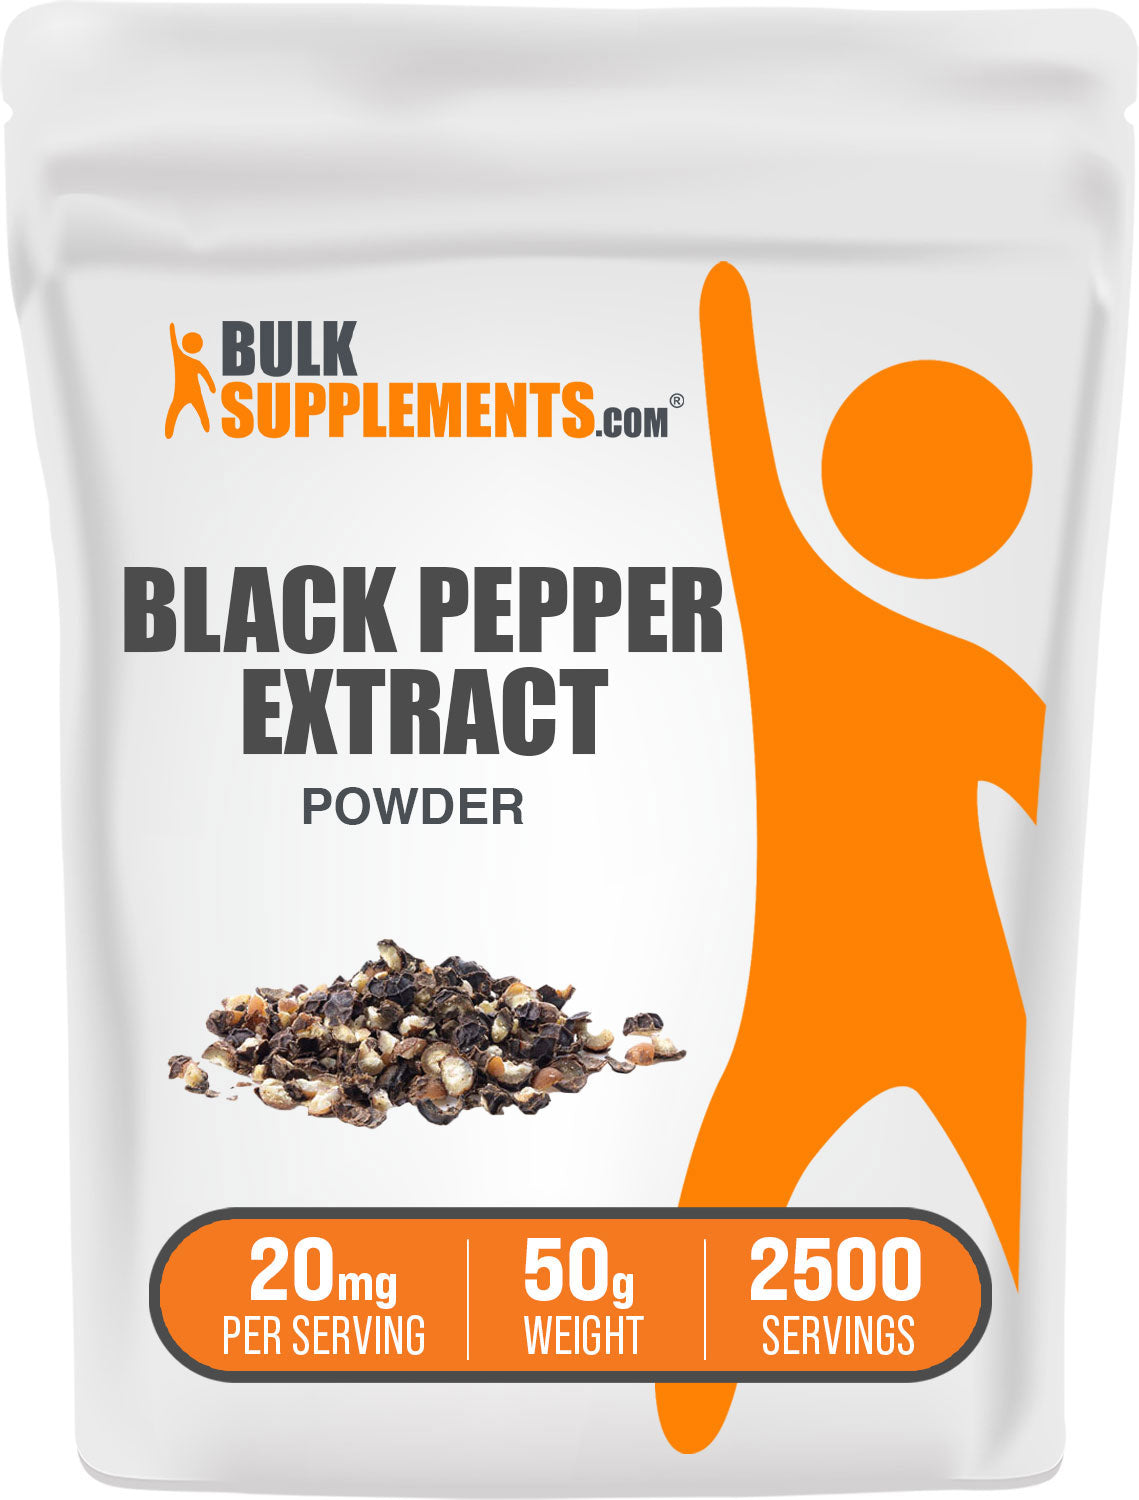 Black pepper extract for detoxification